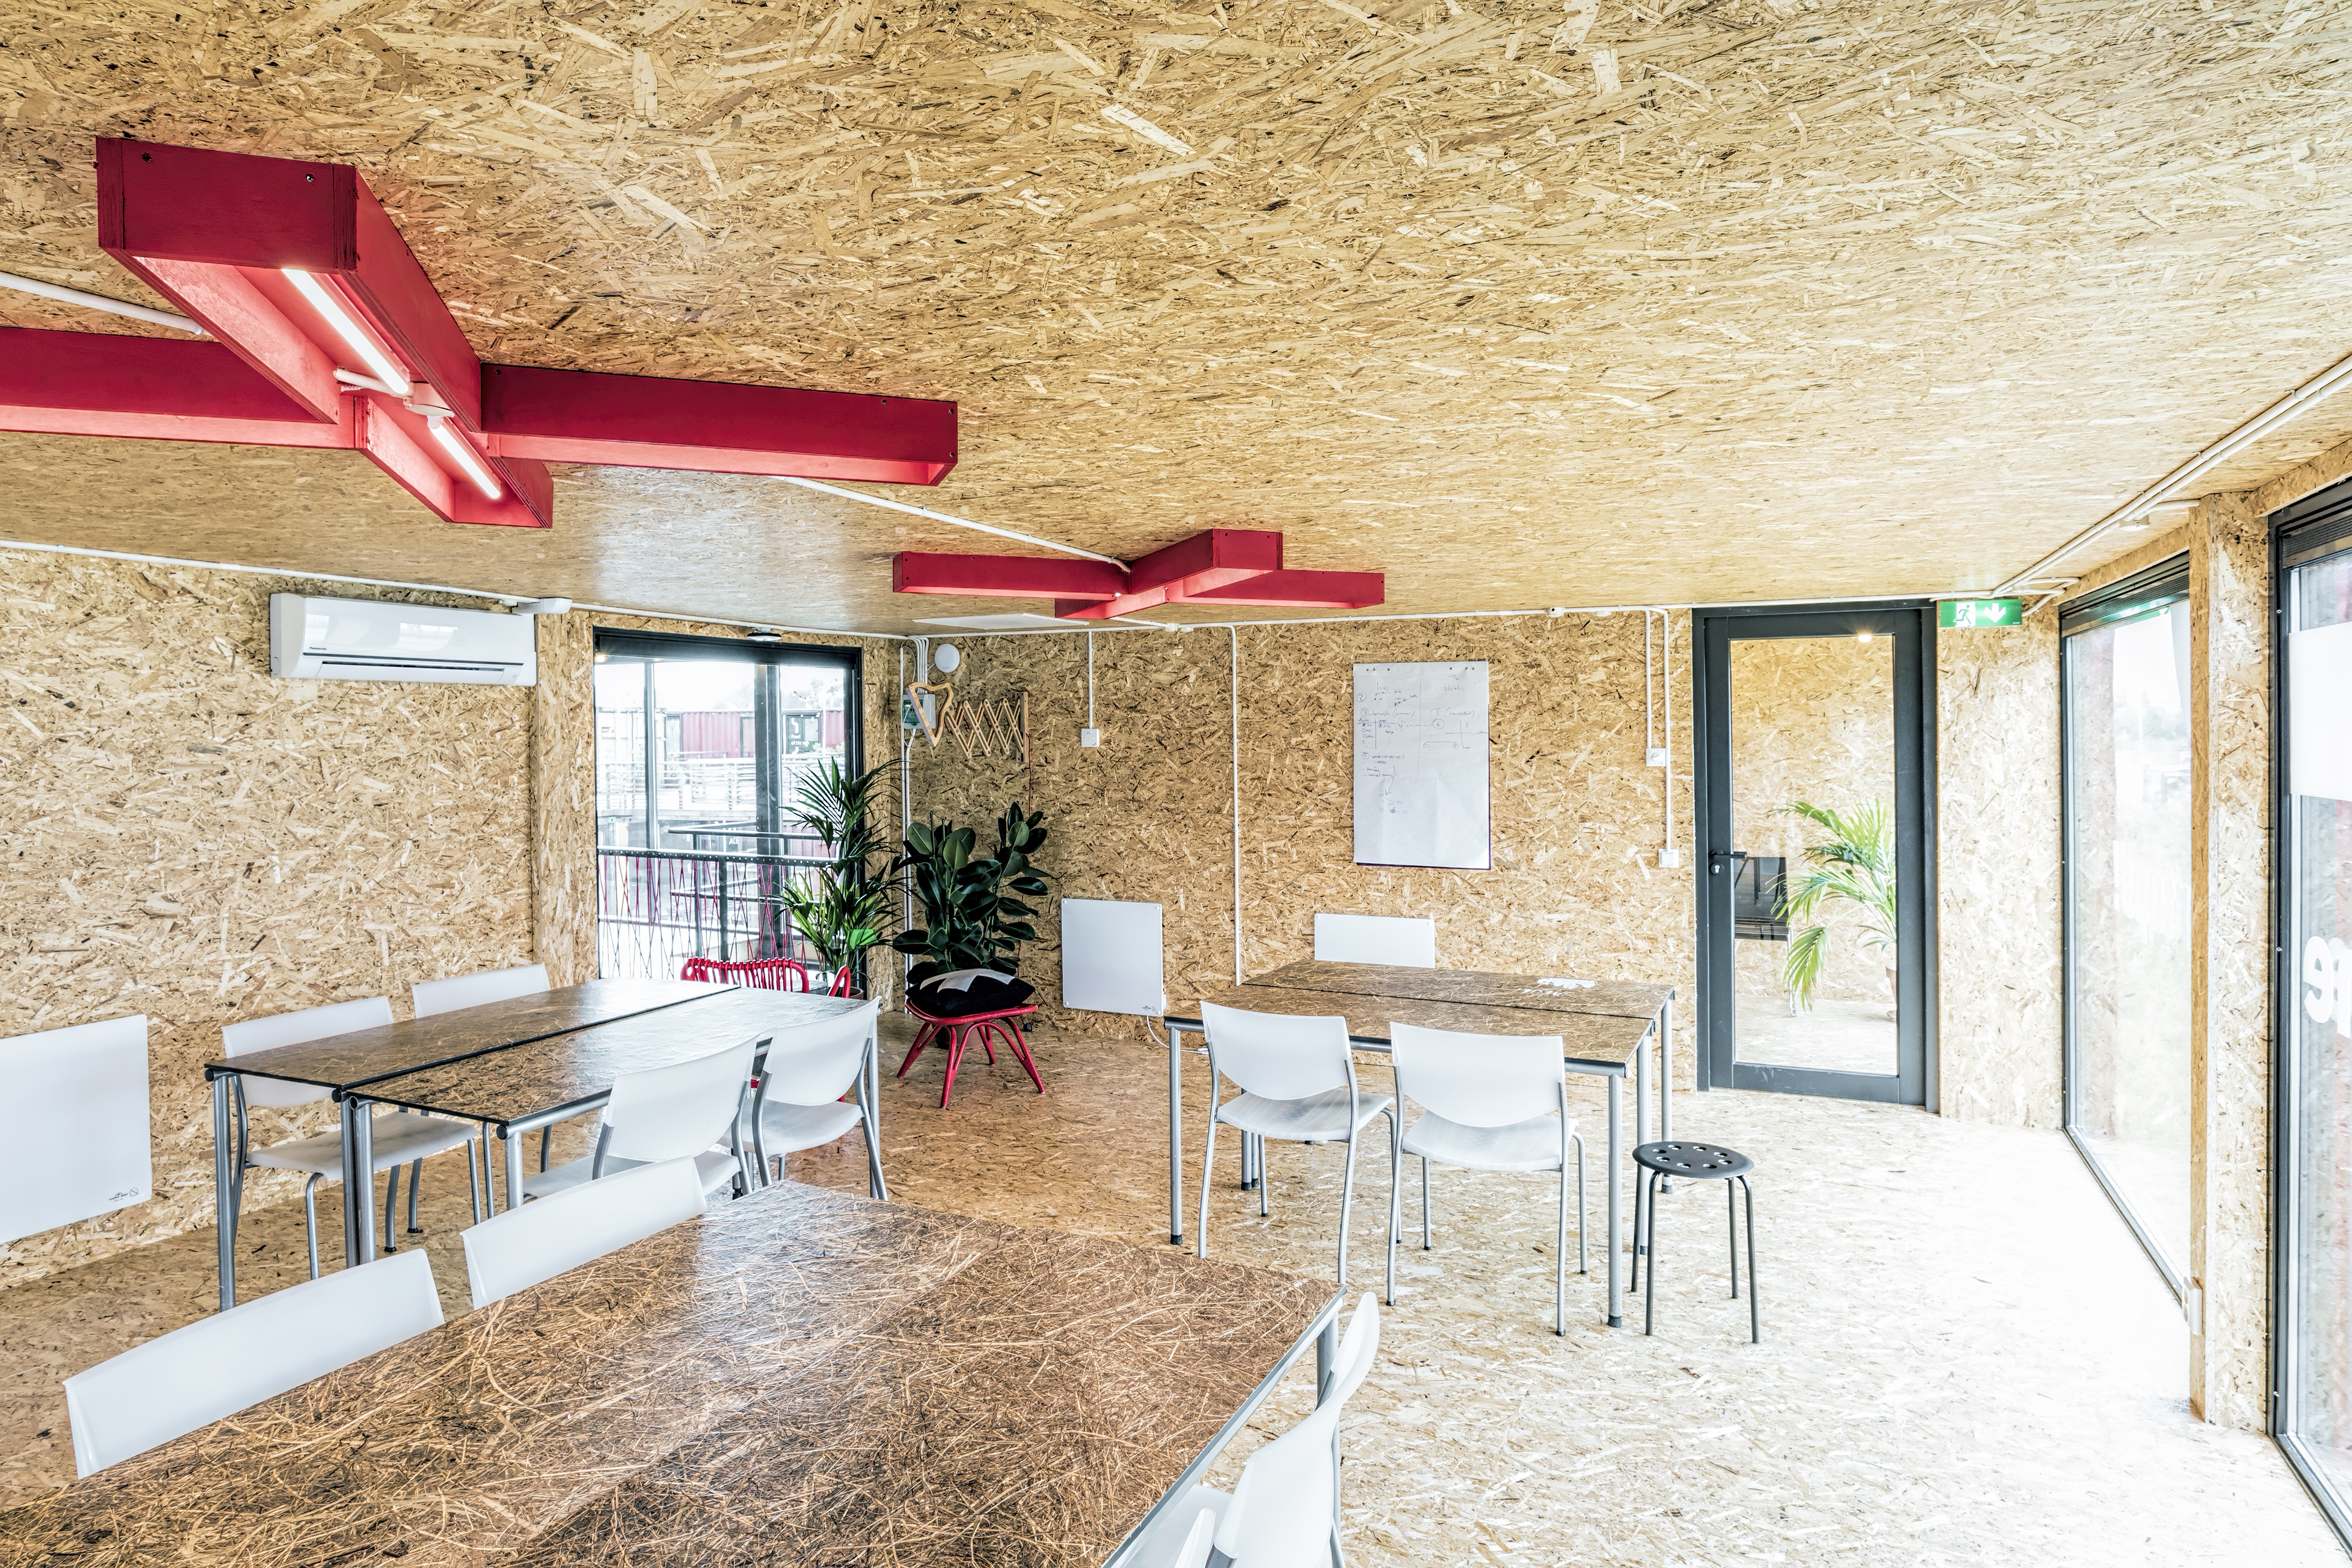 meetingroom amsterdam startup village the eventspace